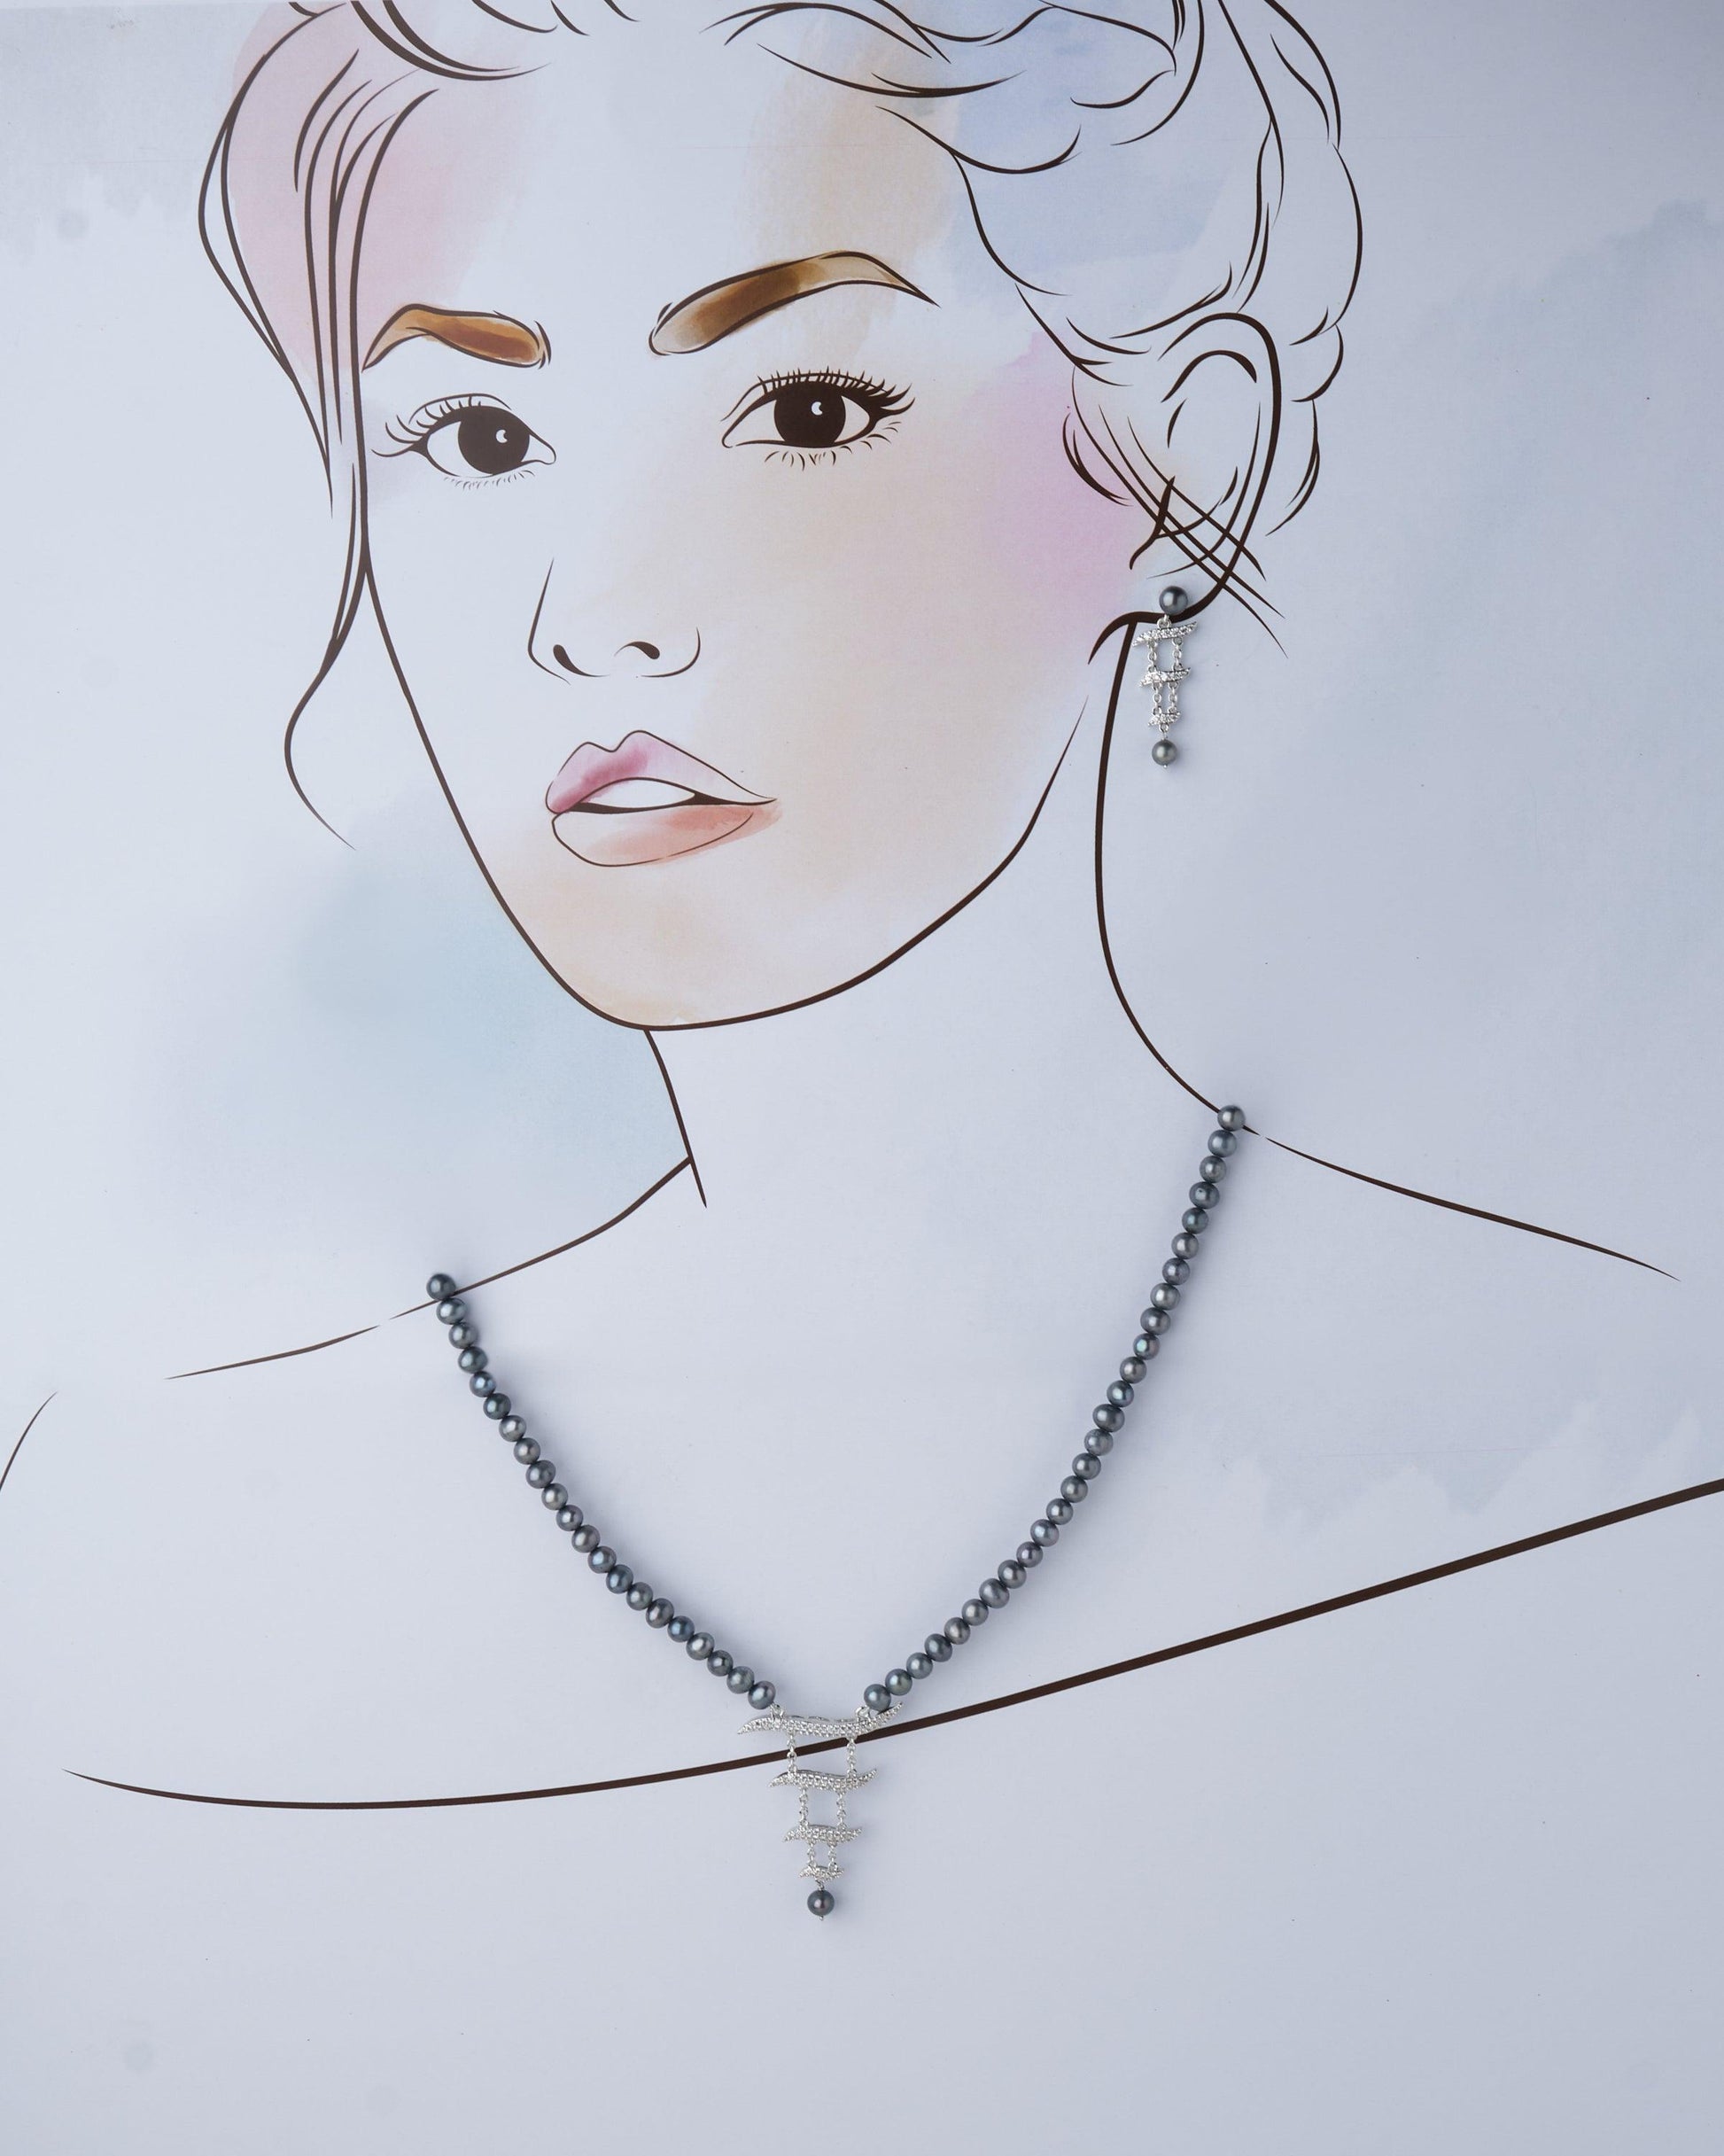 Vintage Black Stone Studded Pearl Necklace Set - Chandrani Pearls